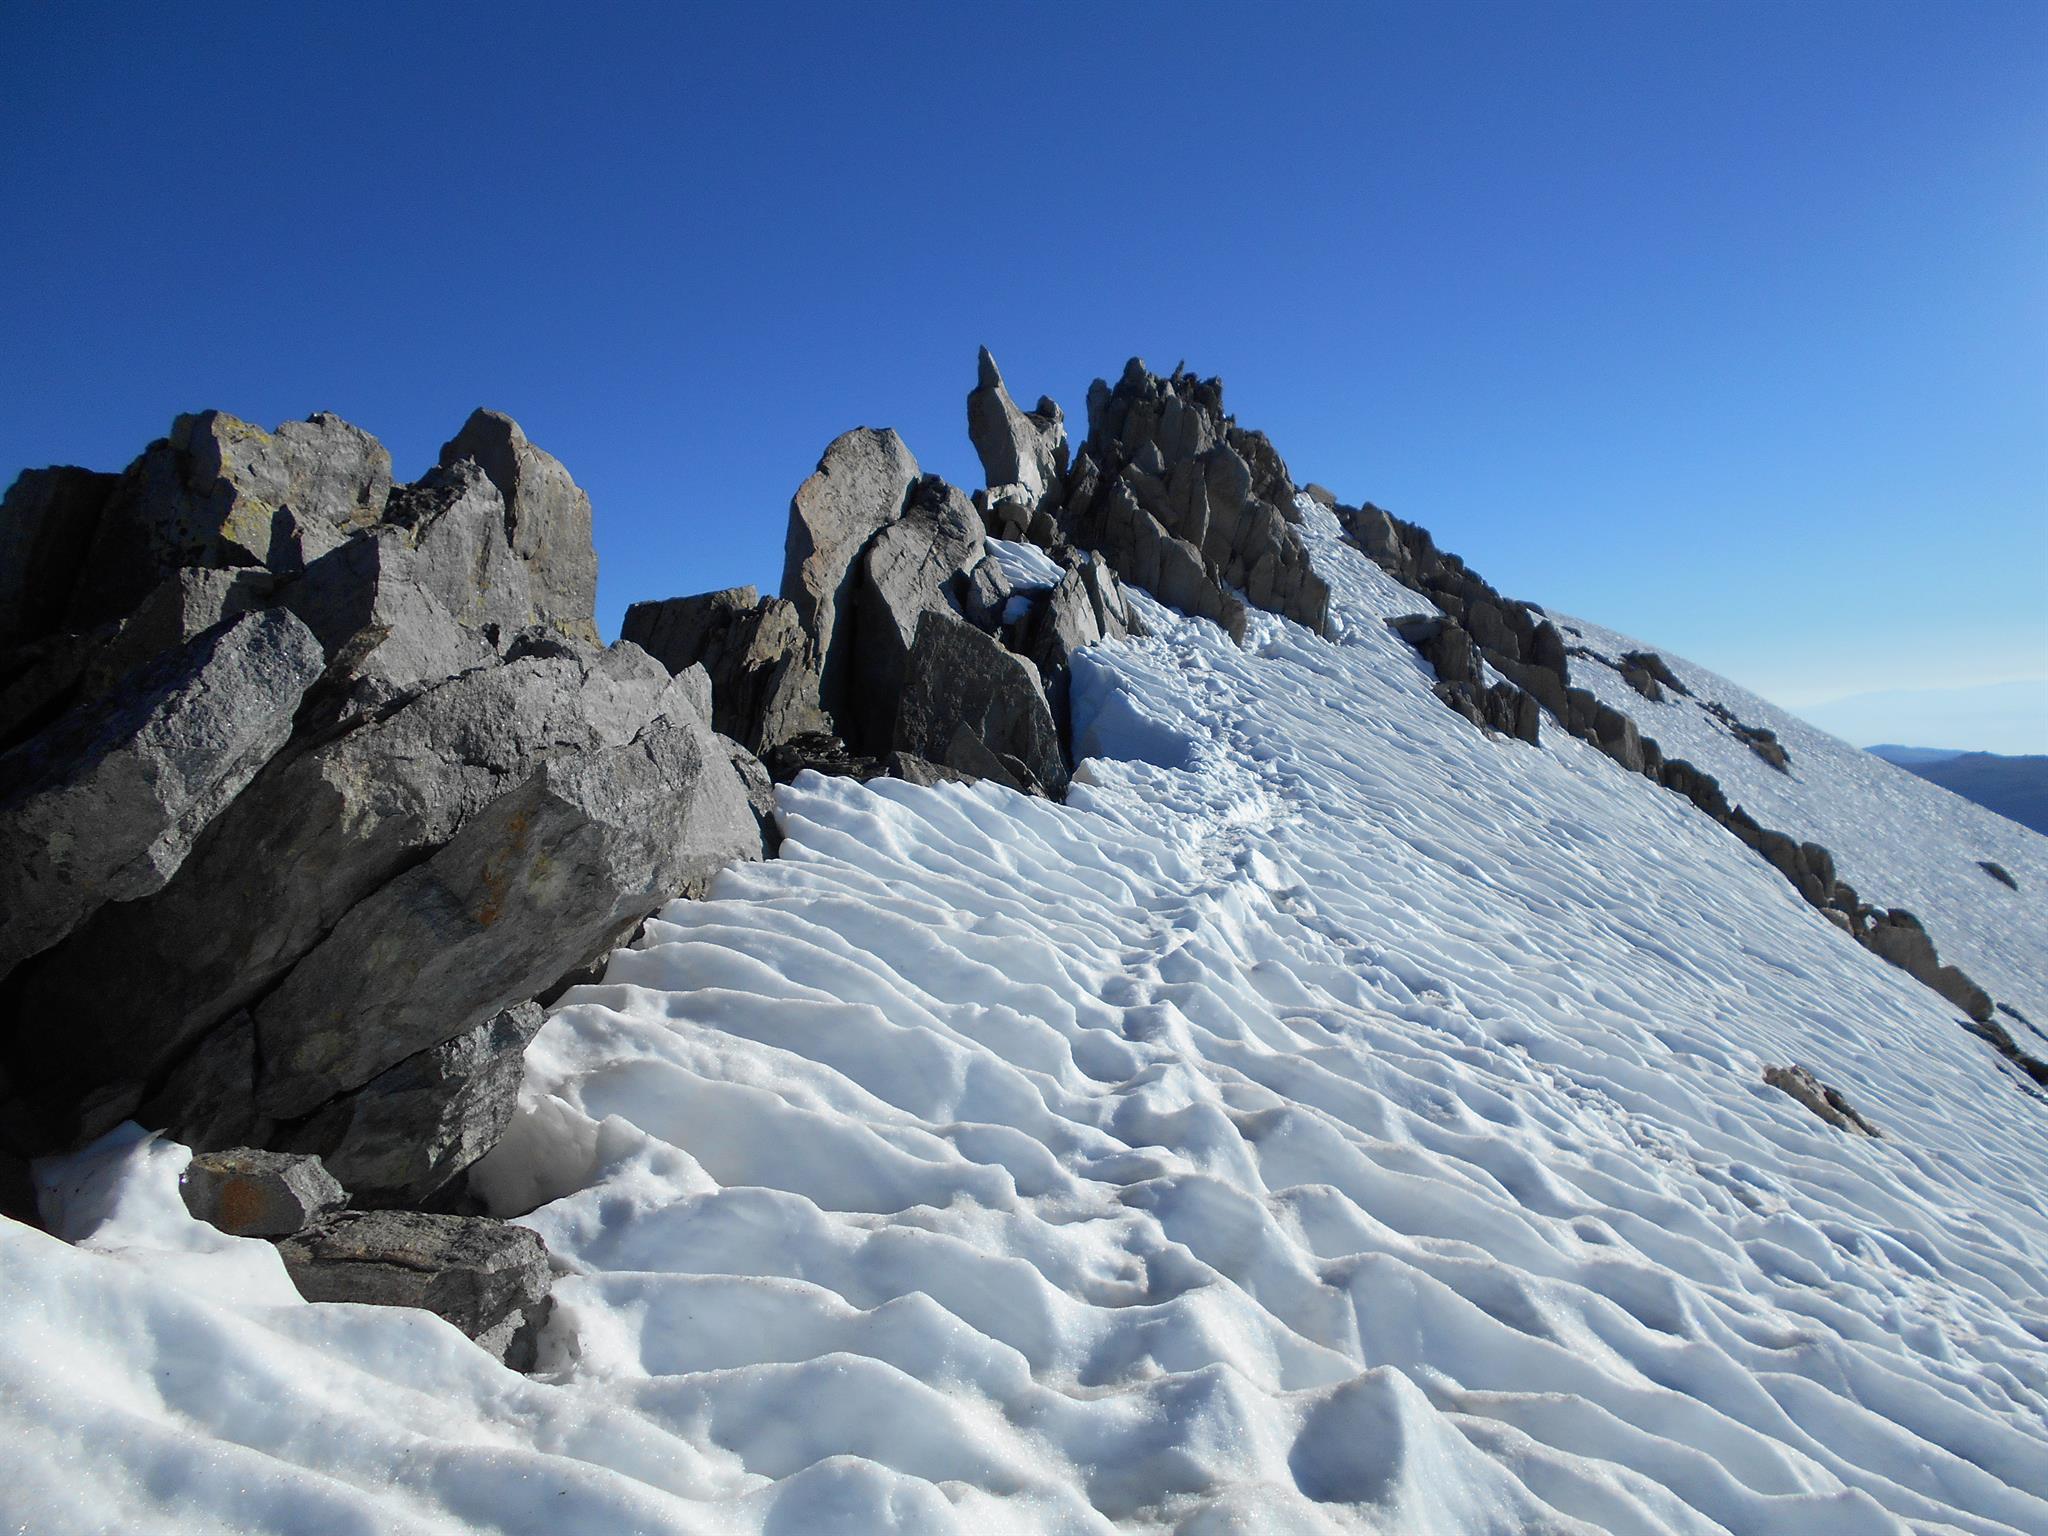 Gannett Peak Expedition - The Mountain Guides